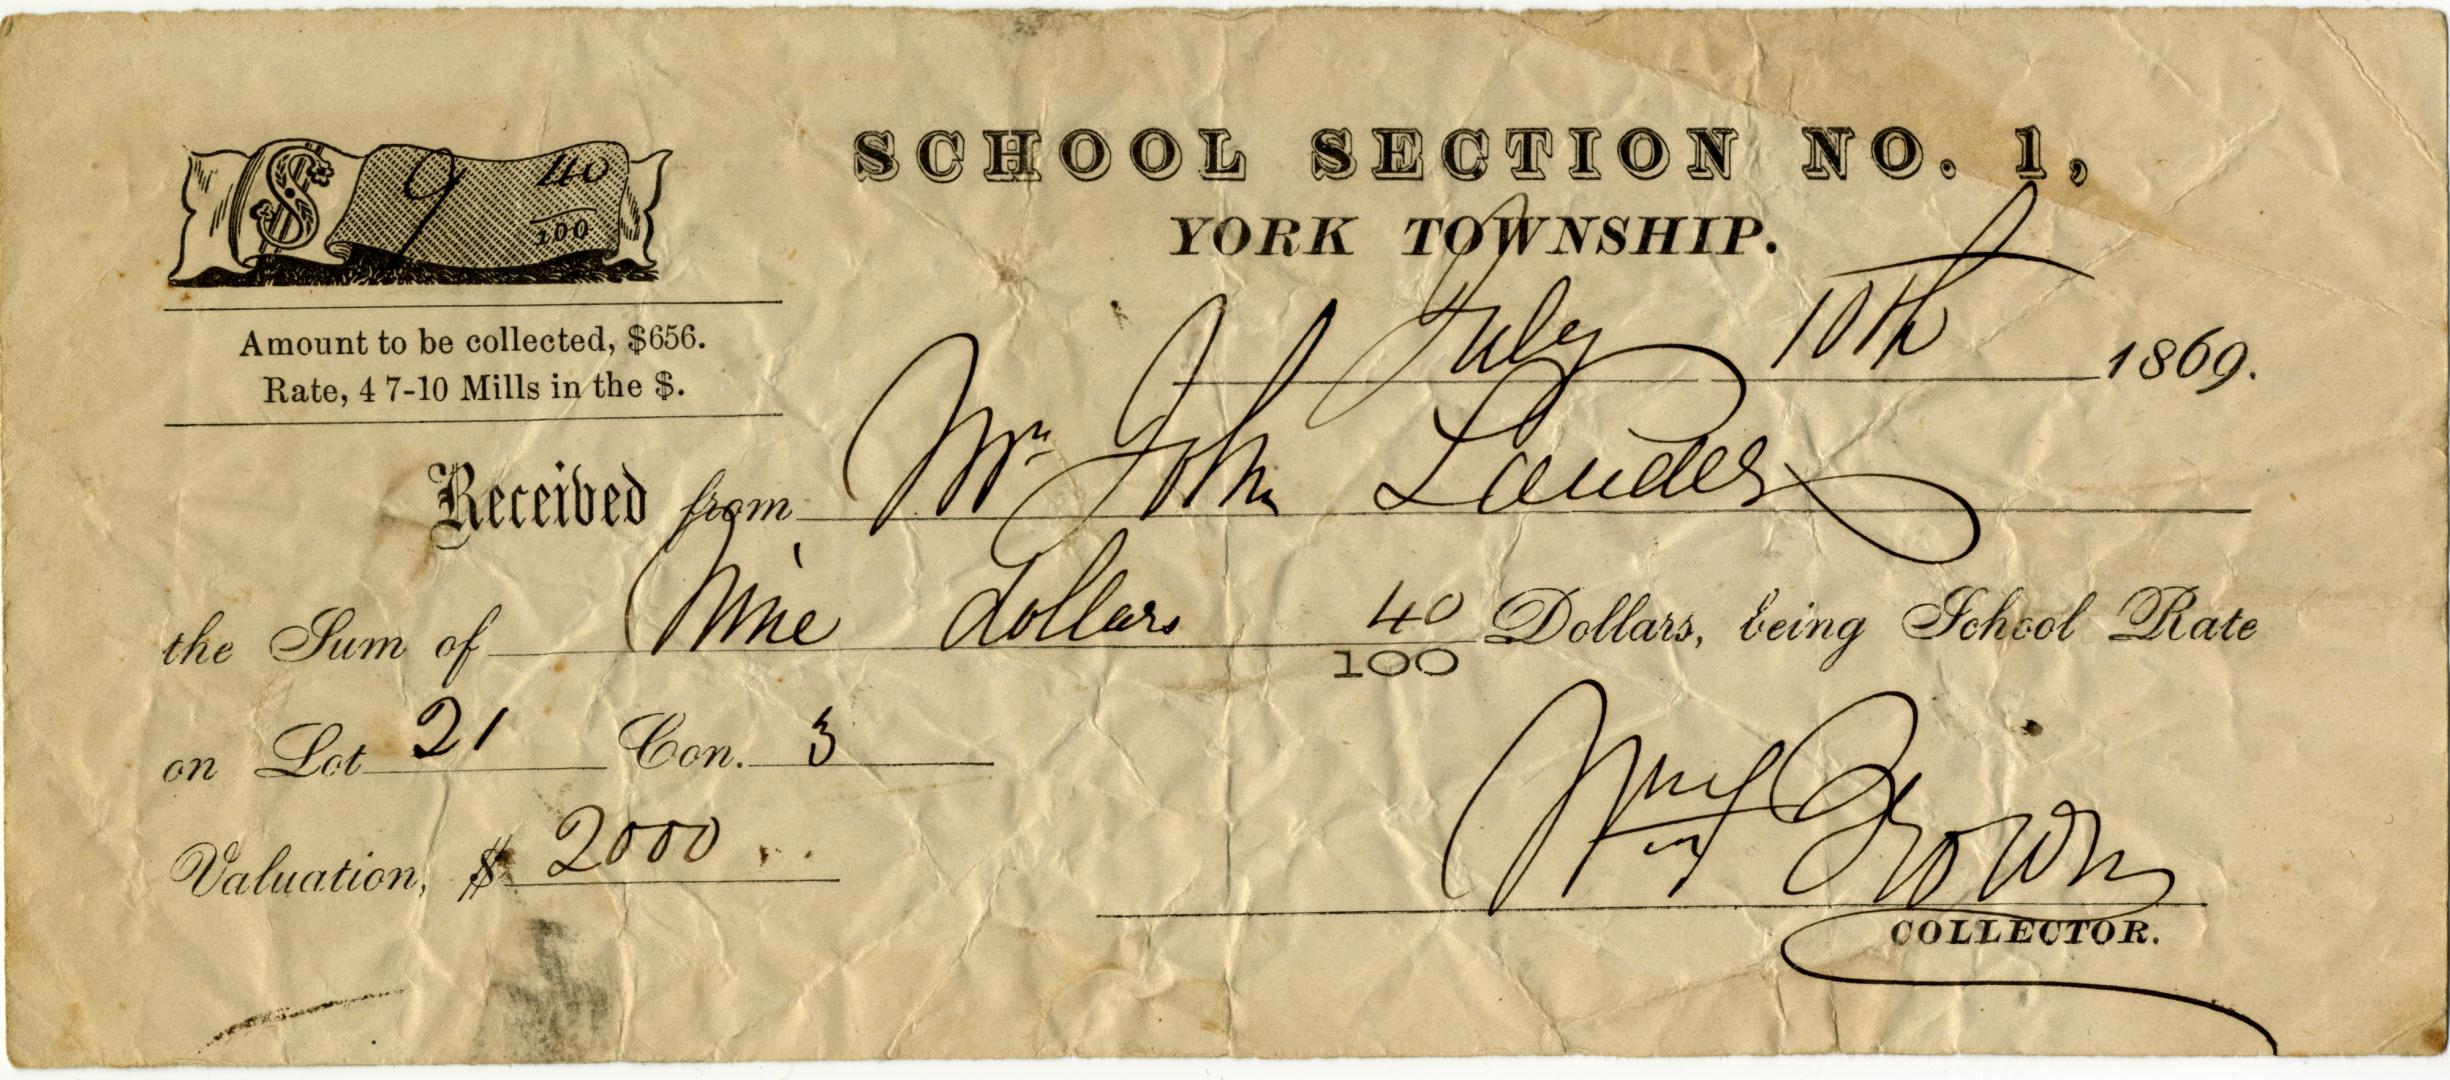 School section no. 1, York Township